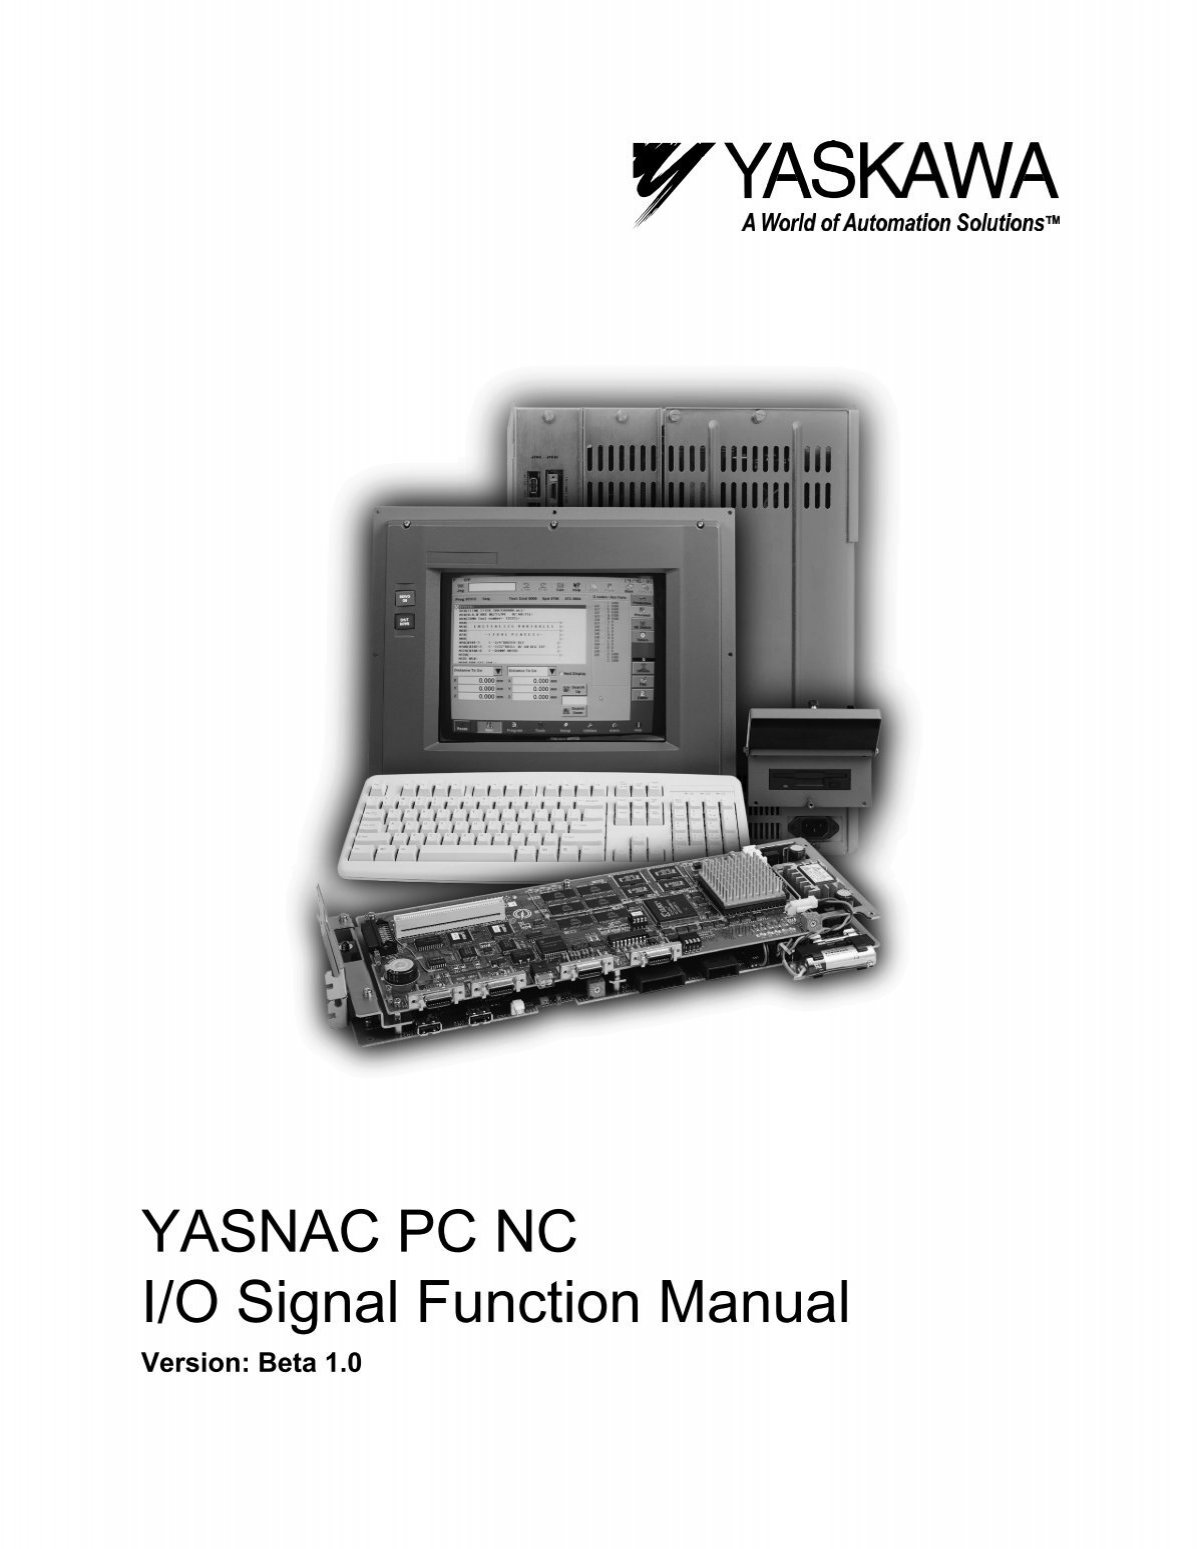 YASNAC PC NC I/O Signal Function Manual - Yaskawa